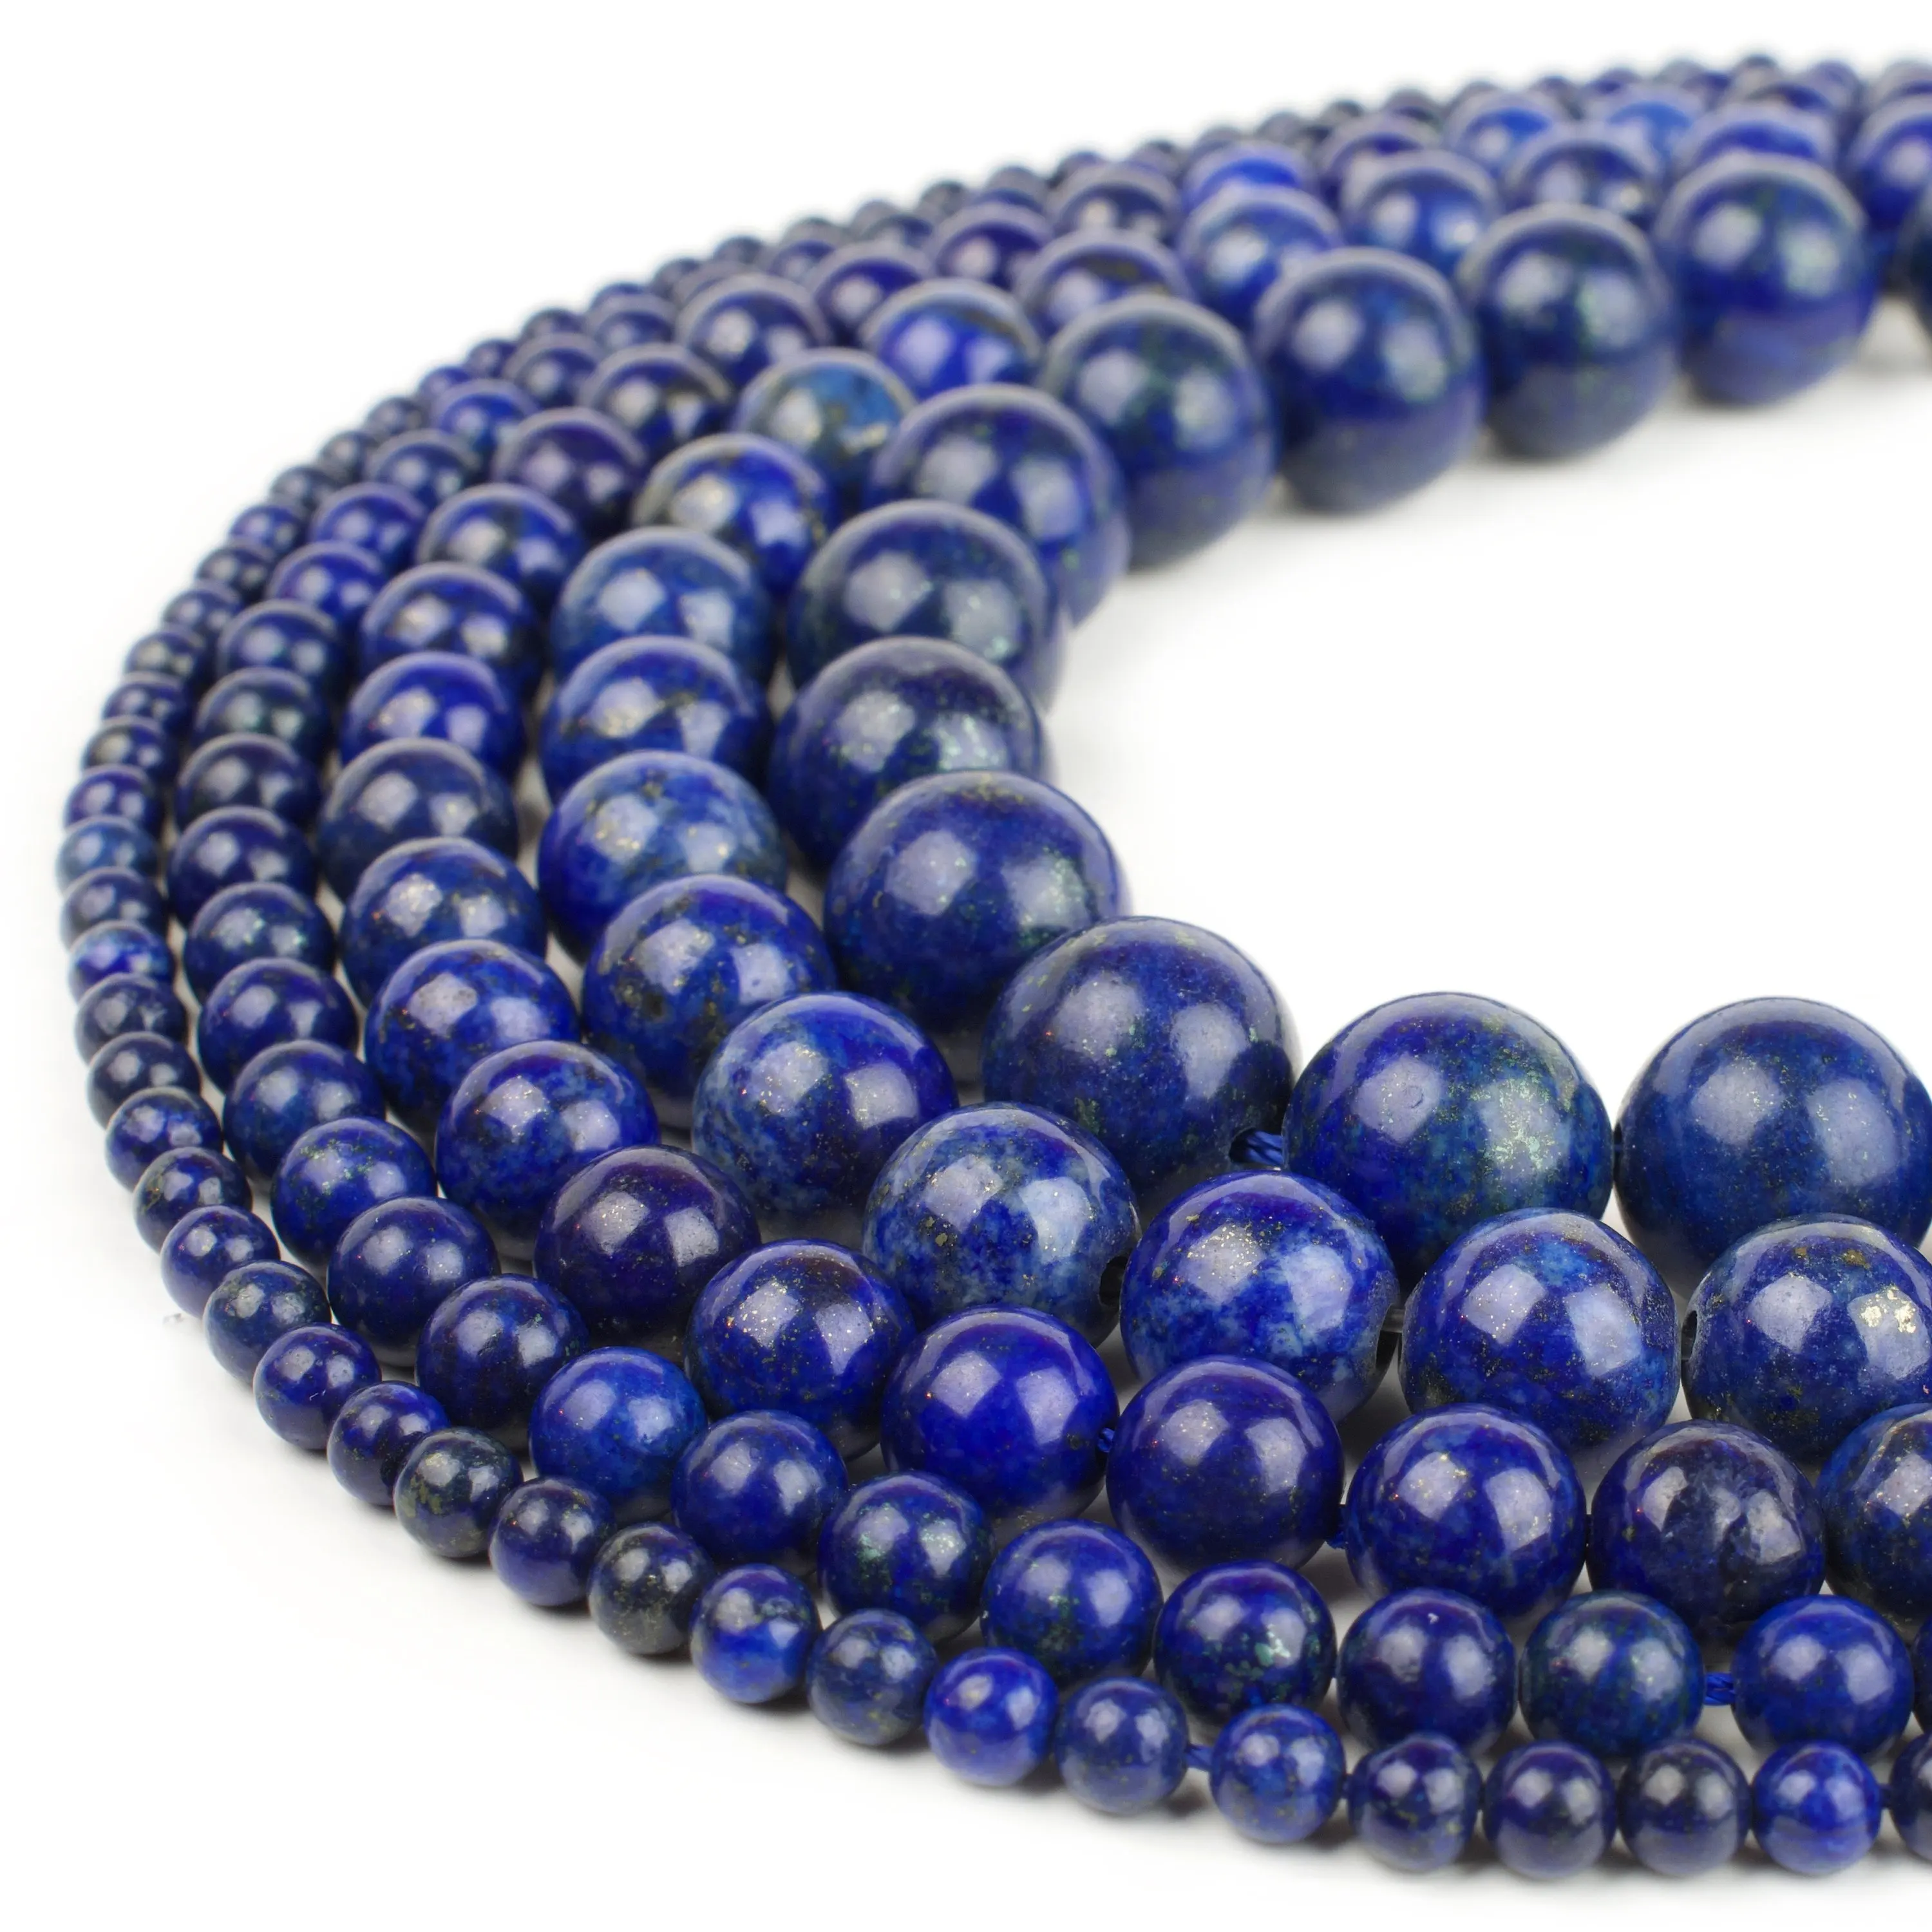 10mm Round Natural Blue Lapis Lazuli Gemstone Beads 19 Beads